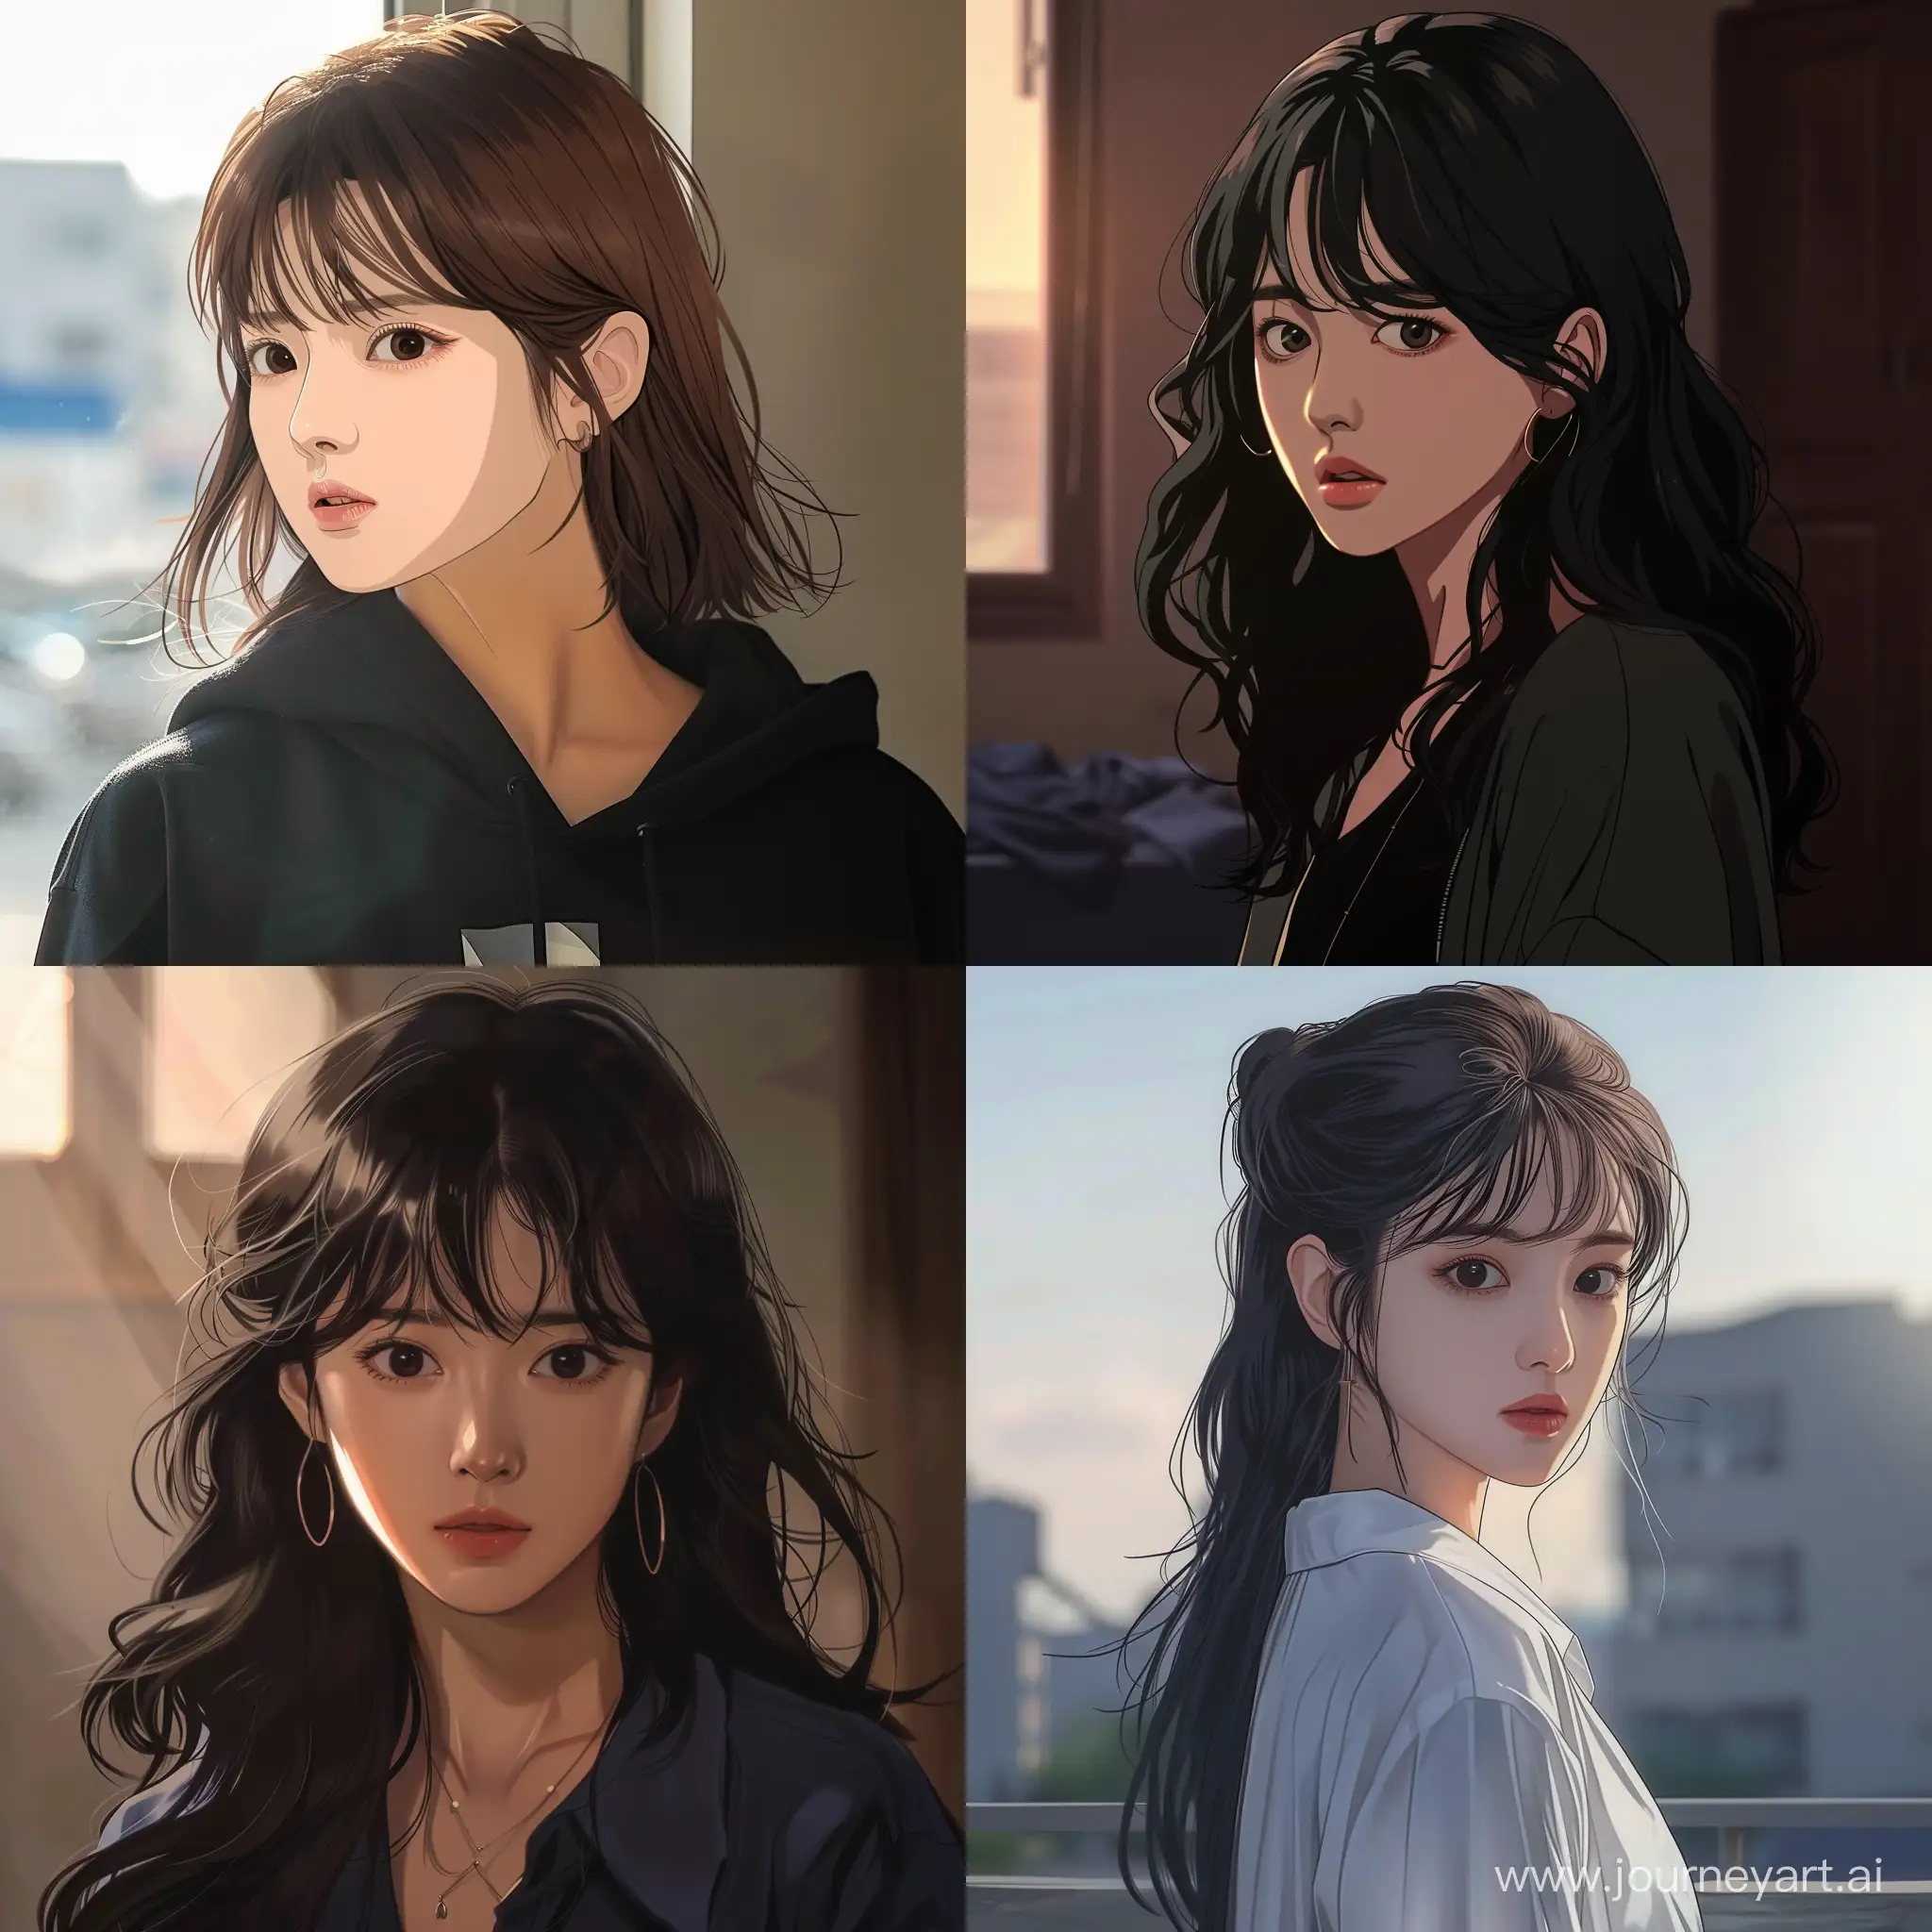 Jang-Won-Young-Portrays-Ji-Eun-Tak-in-Anime-Style